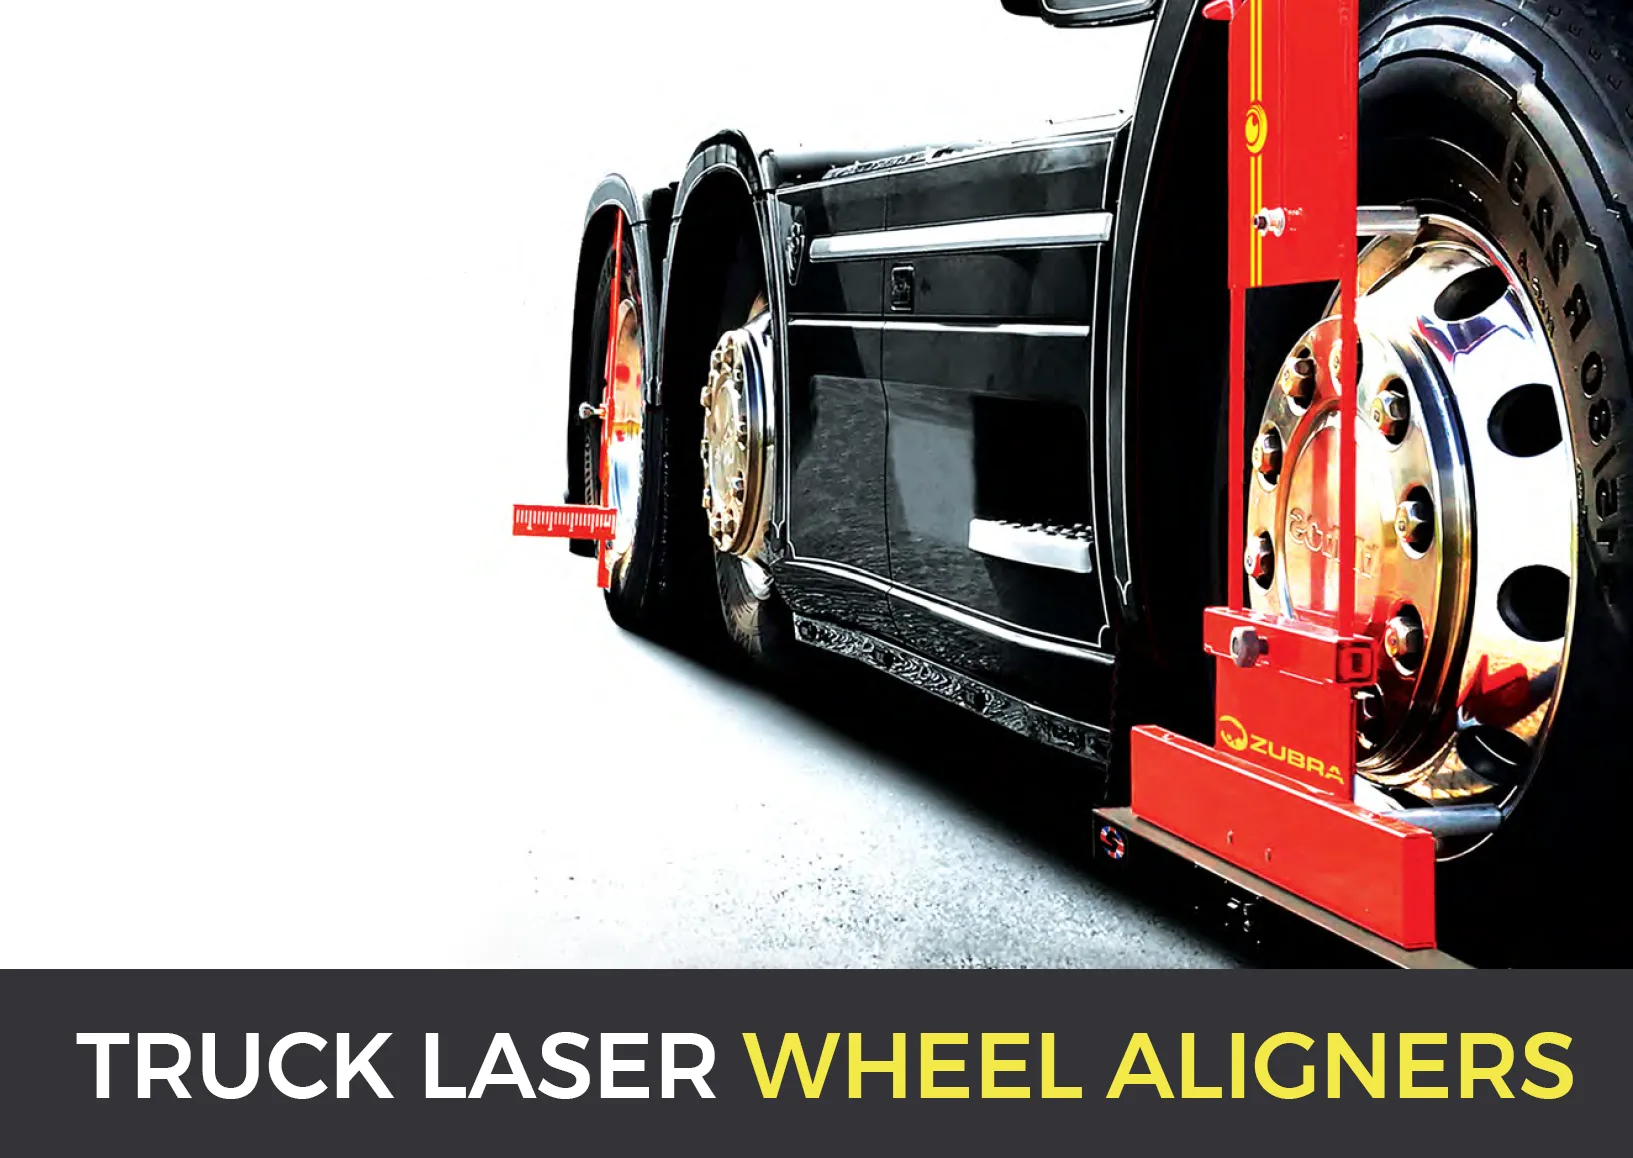 Truck Laser Wheel Aligner